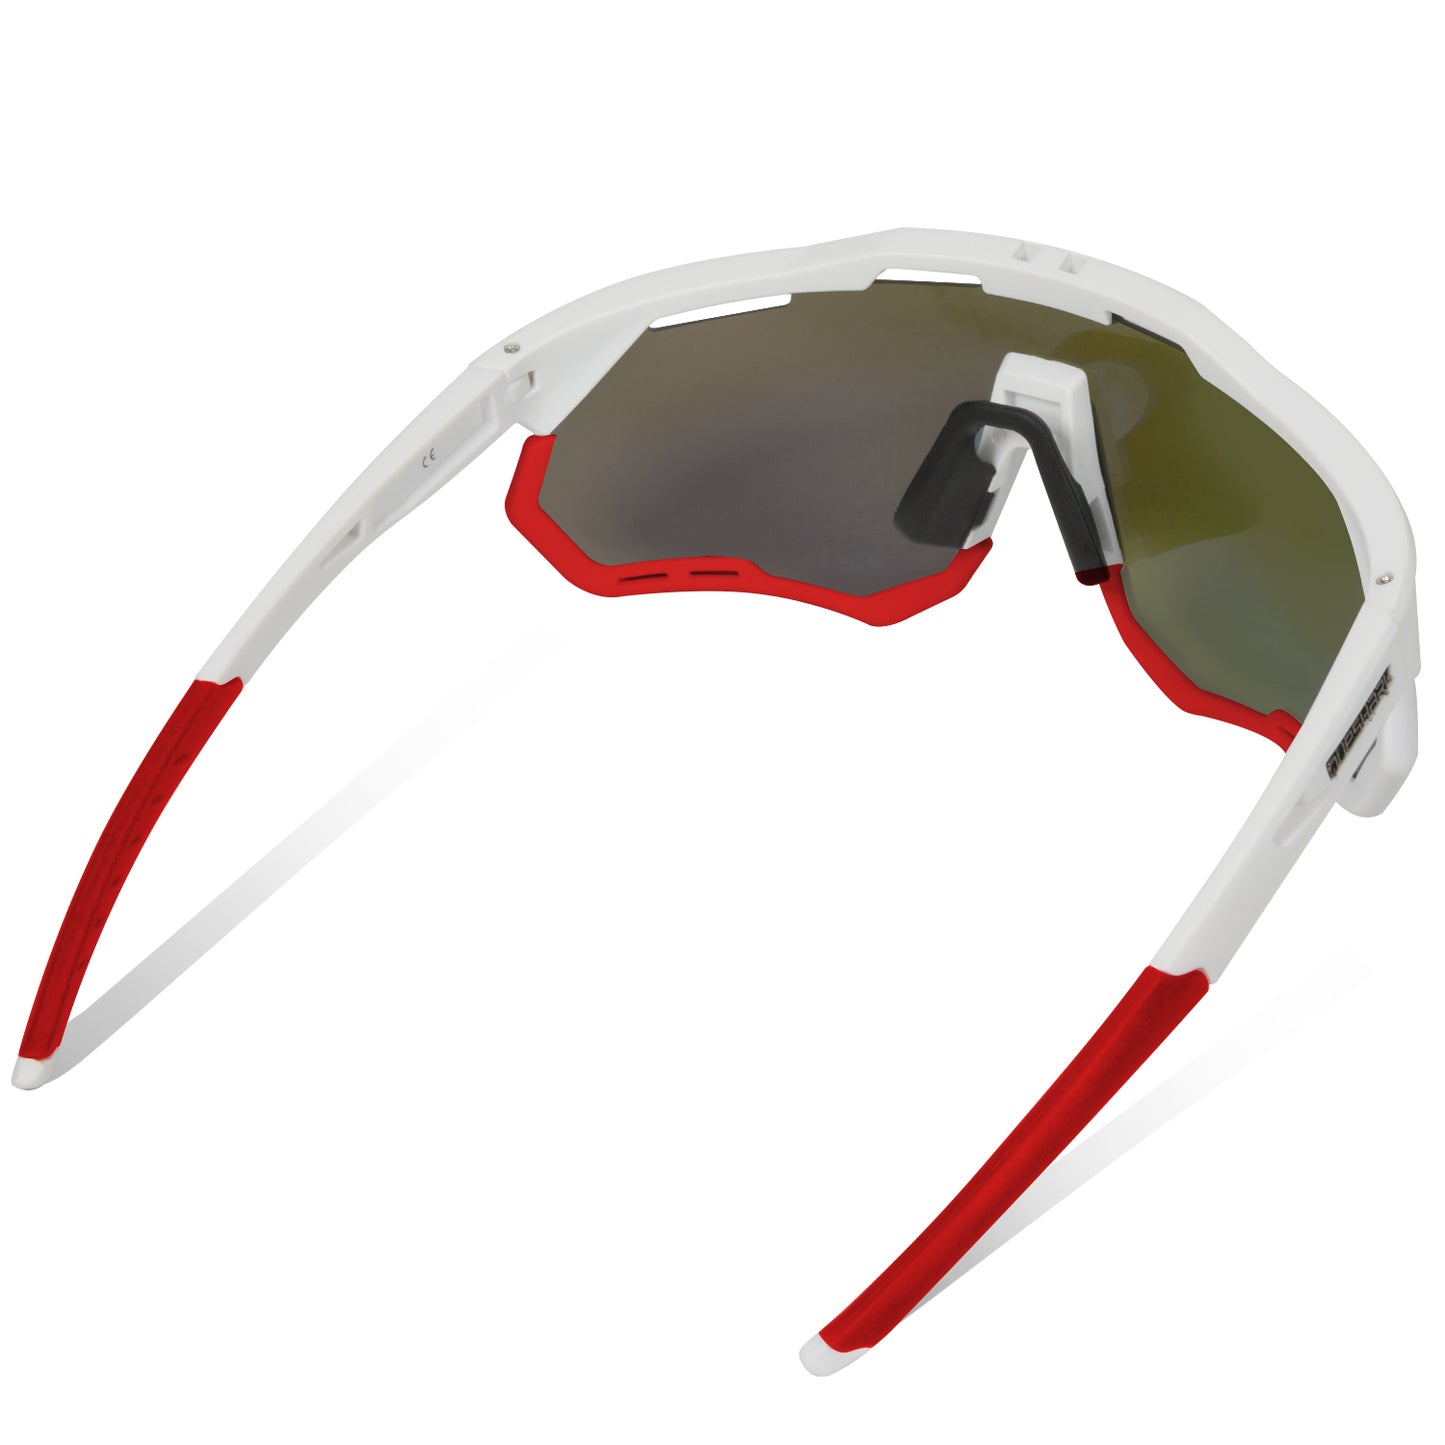 <transcy>QE52 ​​Gafas de ciclismo polarizadas rojas blancas Hombres Mujeres Gafas de sol deportivas con montura / lente reemplazables</transcy>